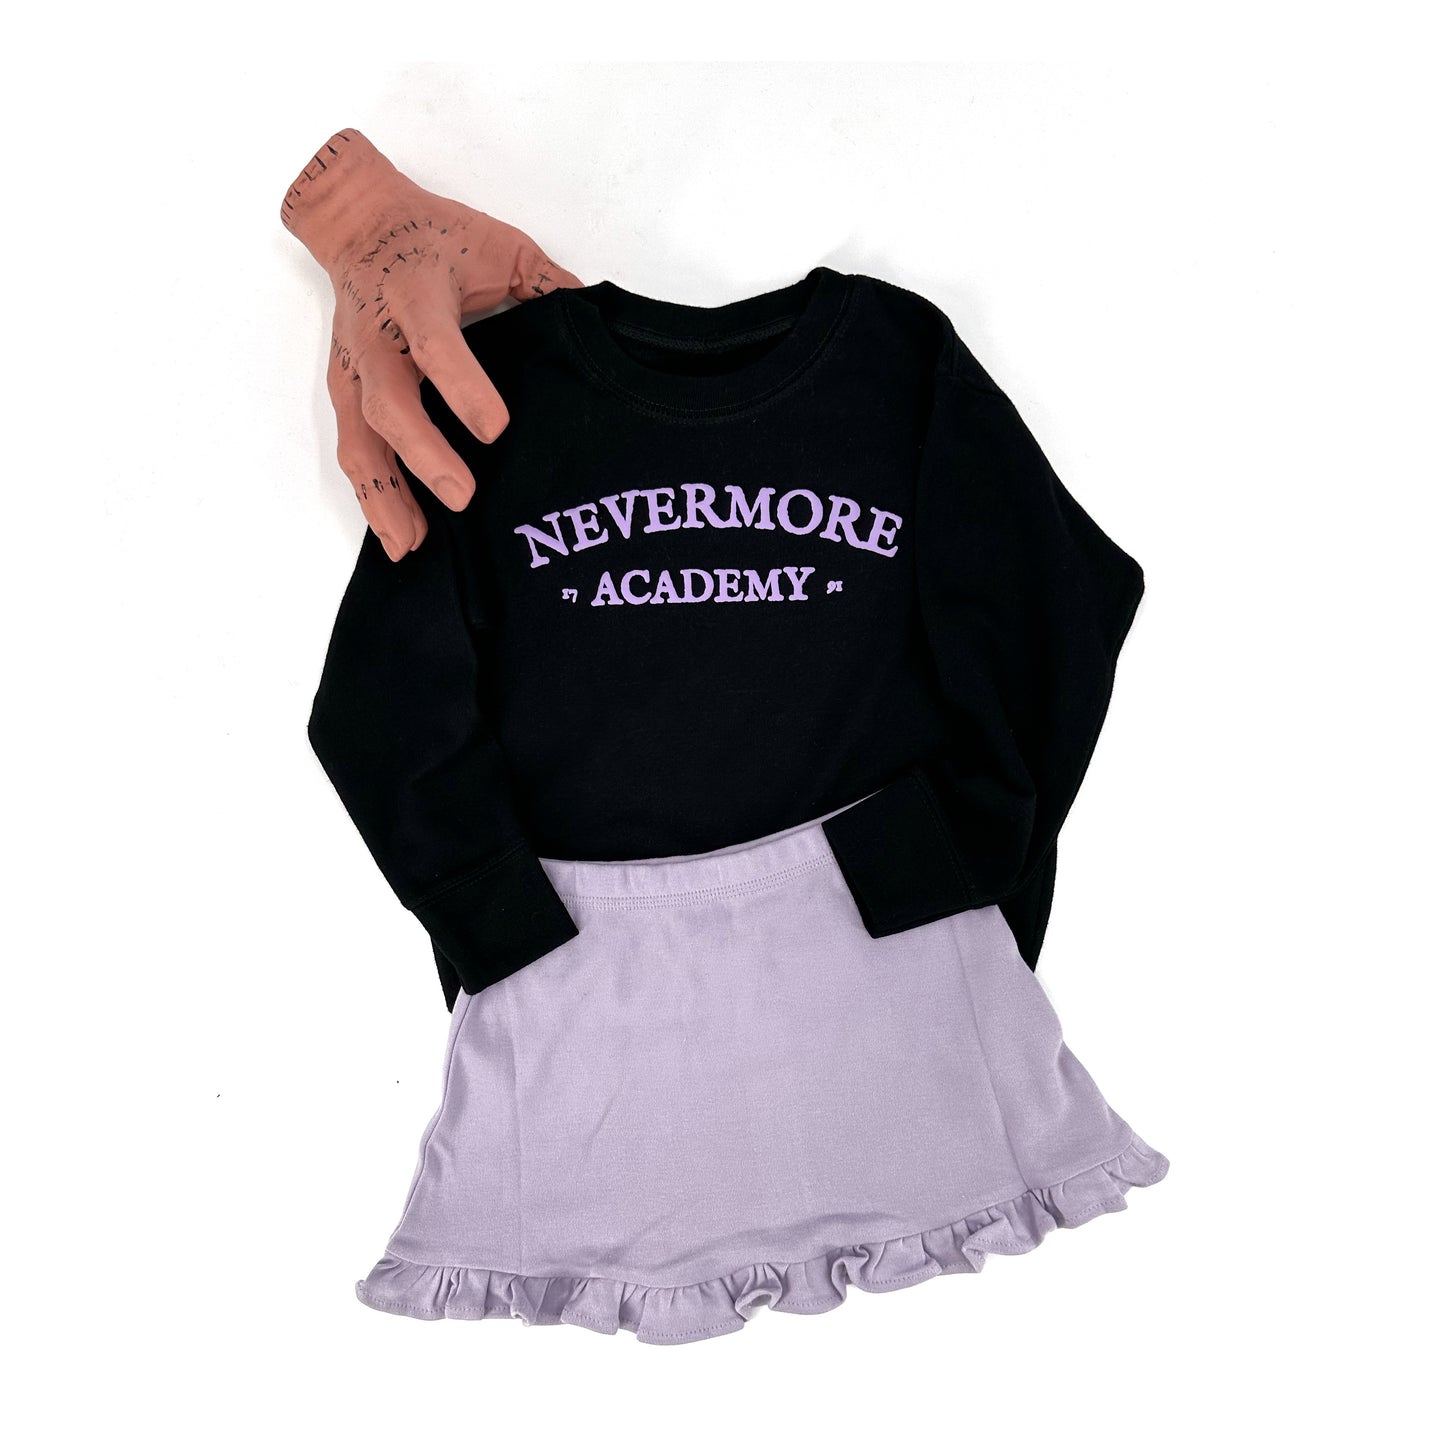 Nevermore Academy Sweatshirt or Tee Shirt